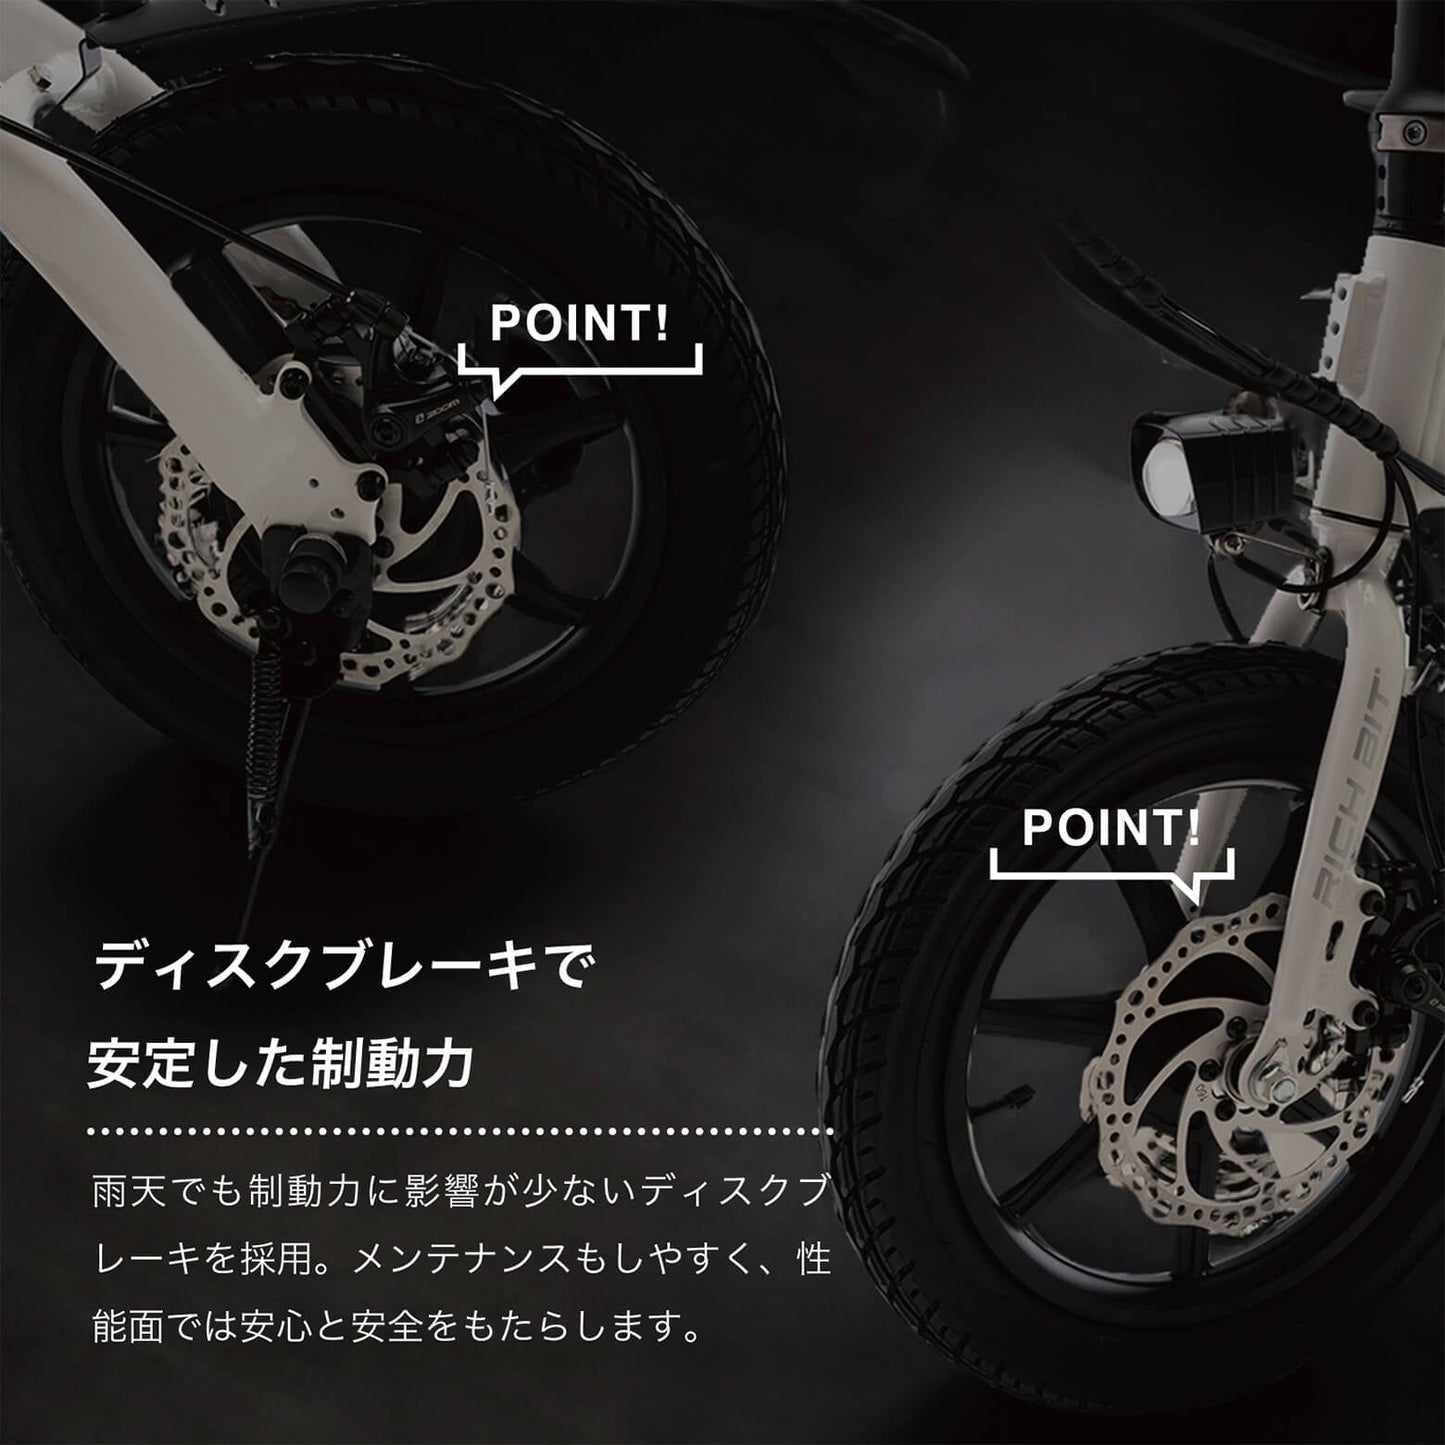 RICHBIT CITY ASSIST（シティブラック）電動アシスト自転車  型式認定取得済【予約購入/25%OFF】